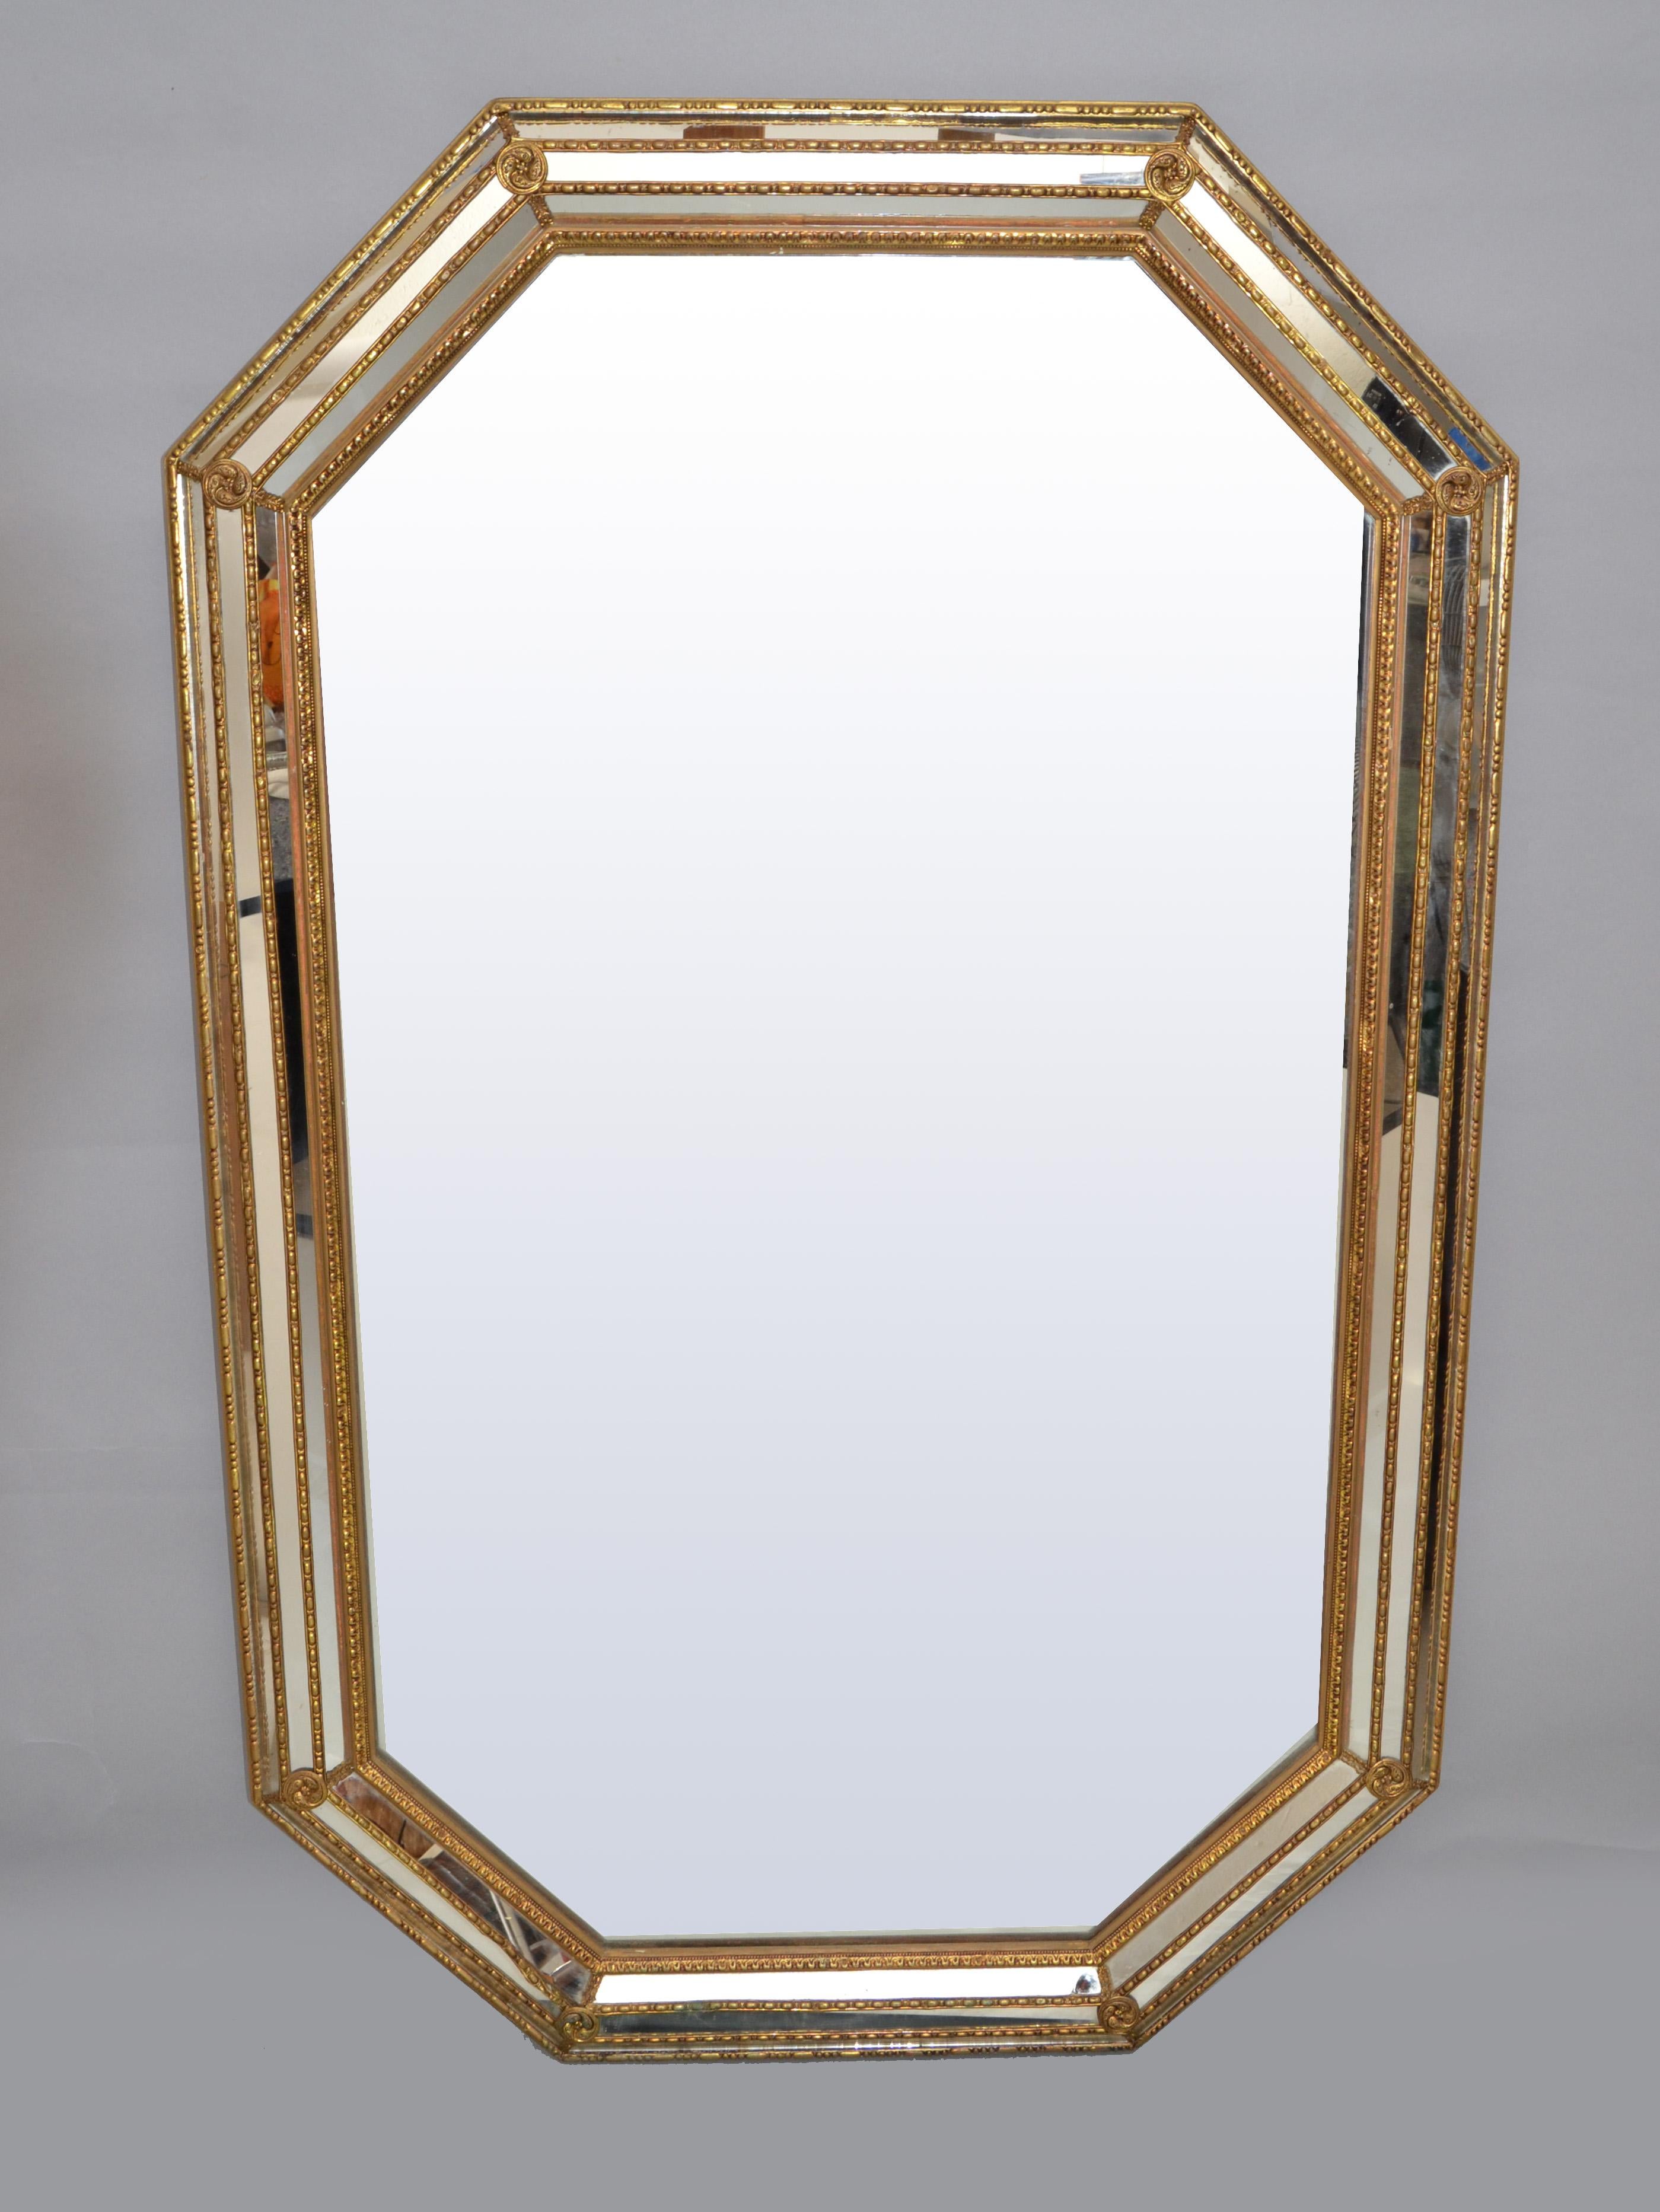 Venetian Hexagonal Wall Mirror Gilt Wood & Bohemian Ornaments 1930 Italy For Sale 7